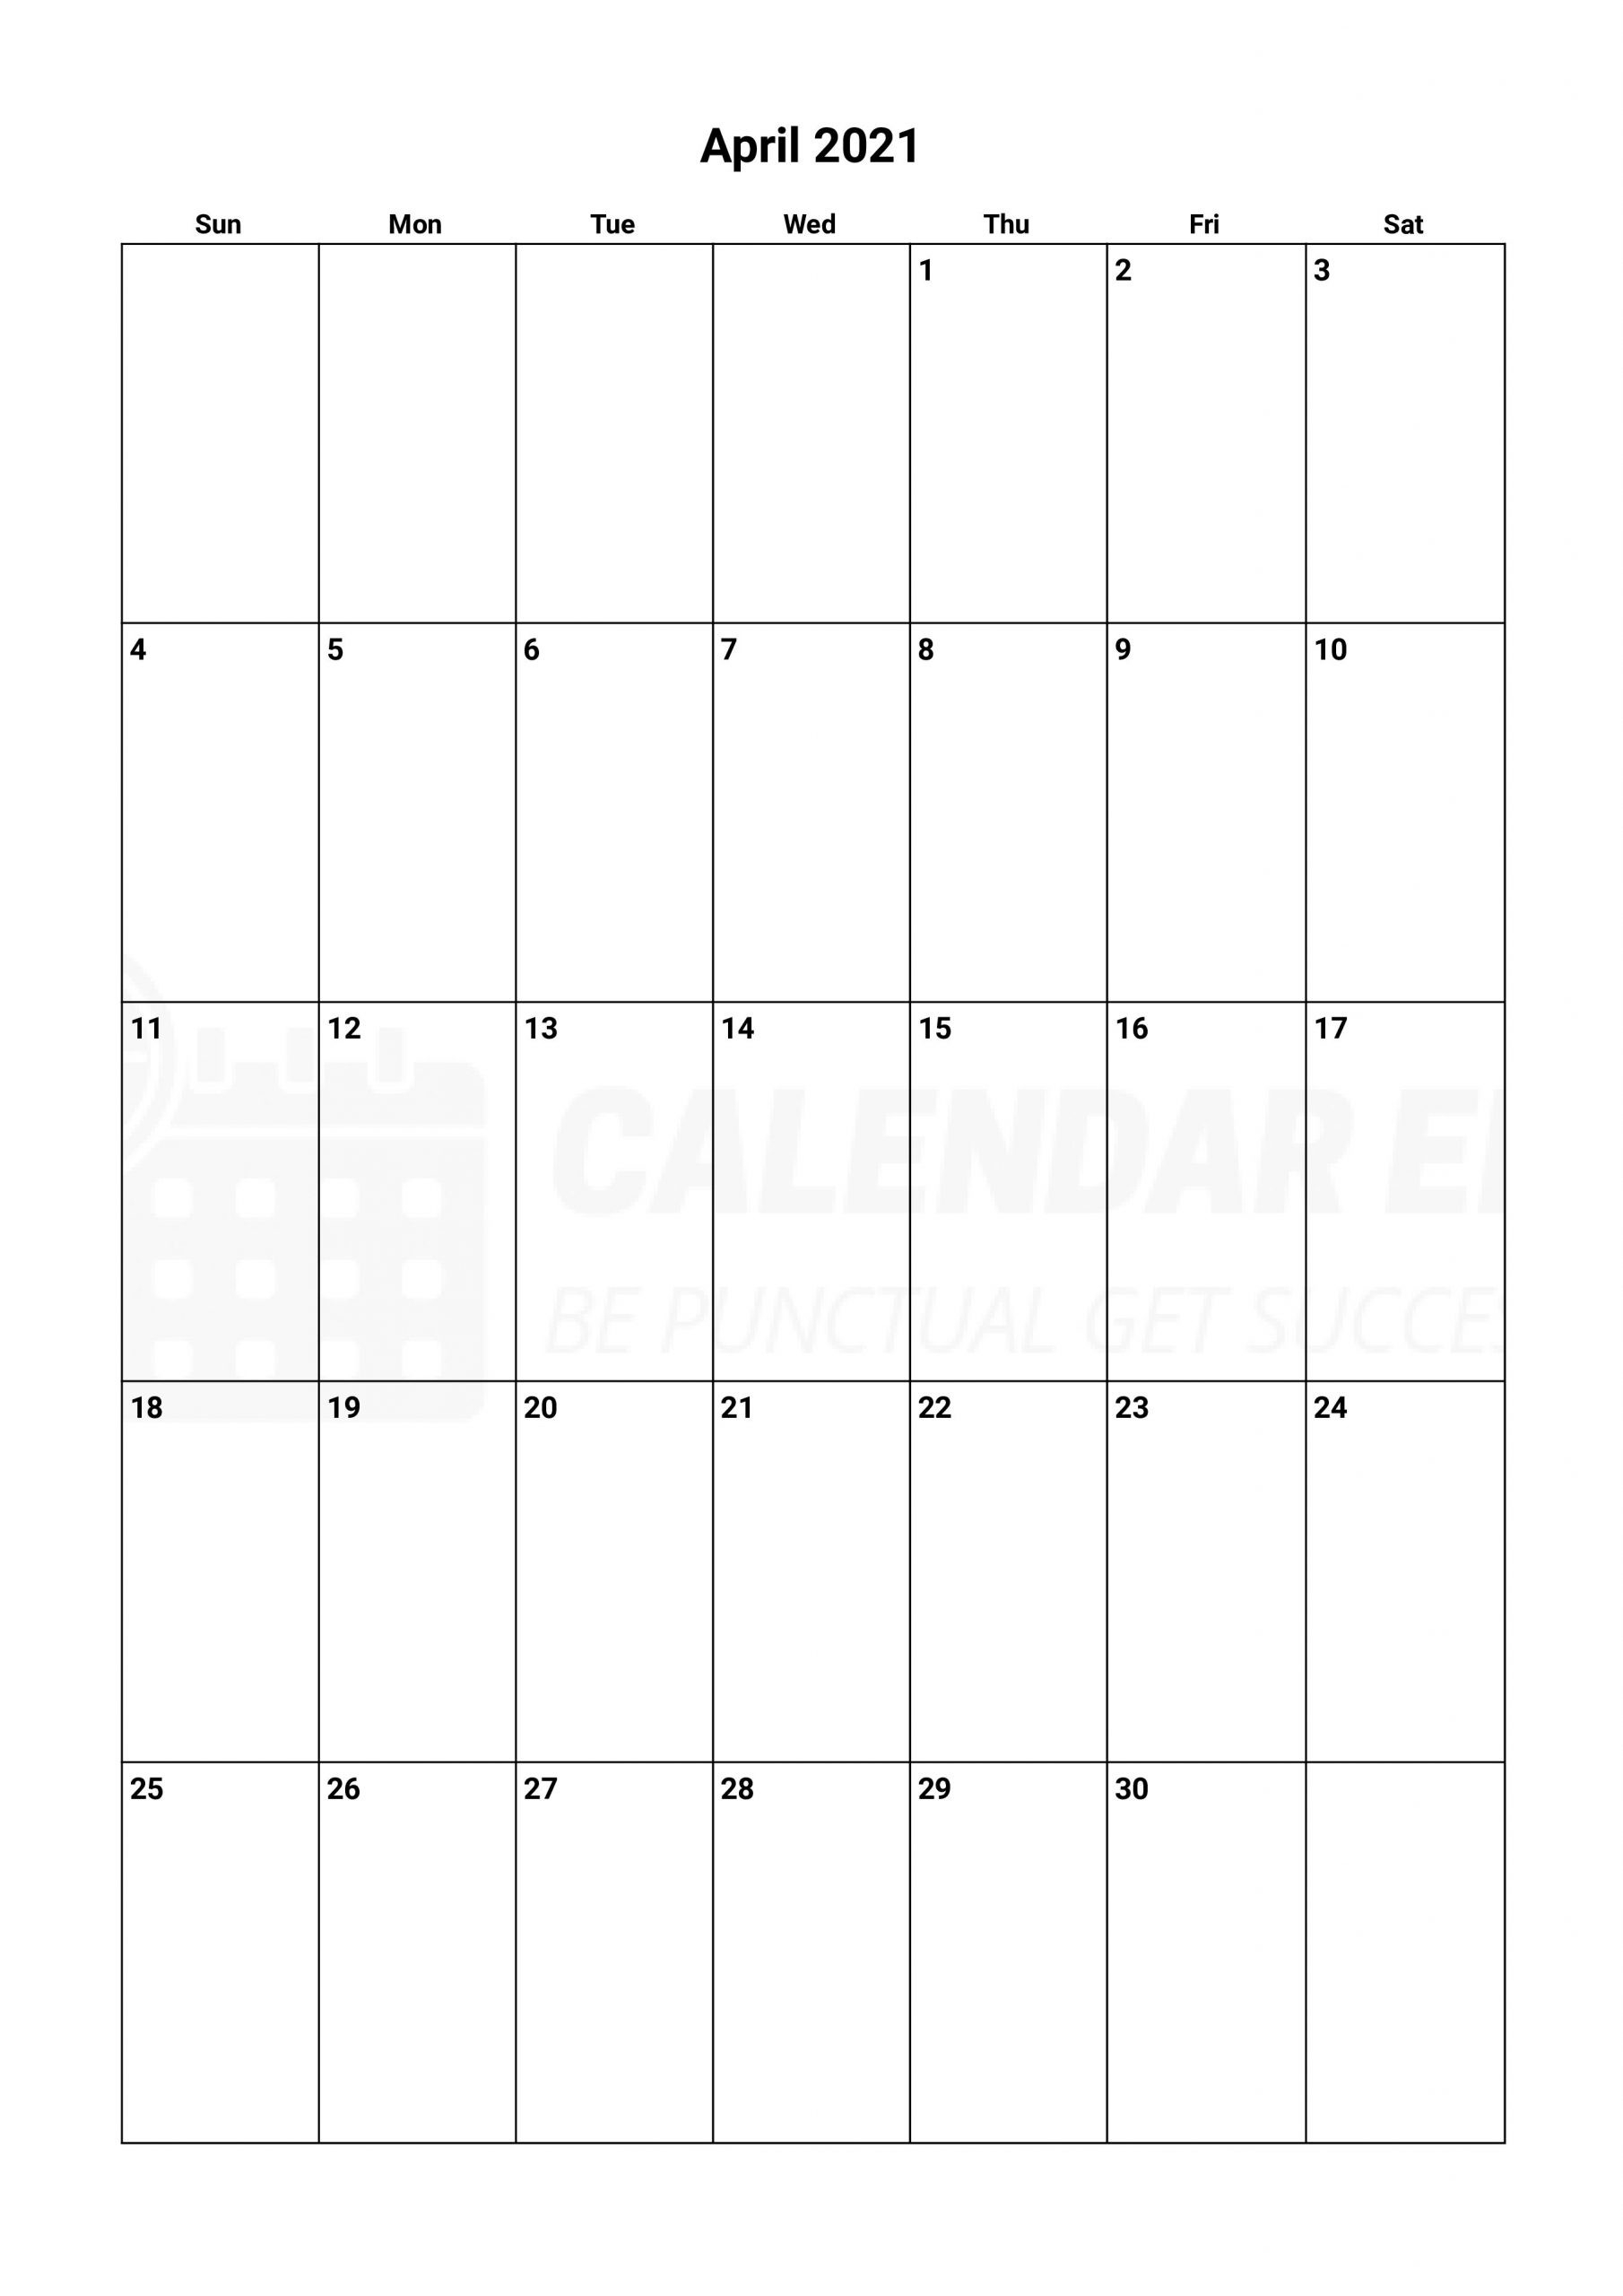 Free April 2021 Calendars | 2021 Blank Printable Templates-Blank April 2021 Calendar